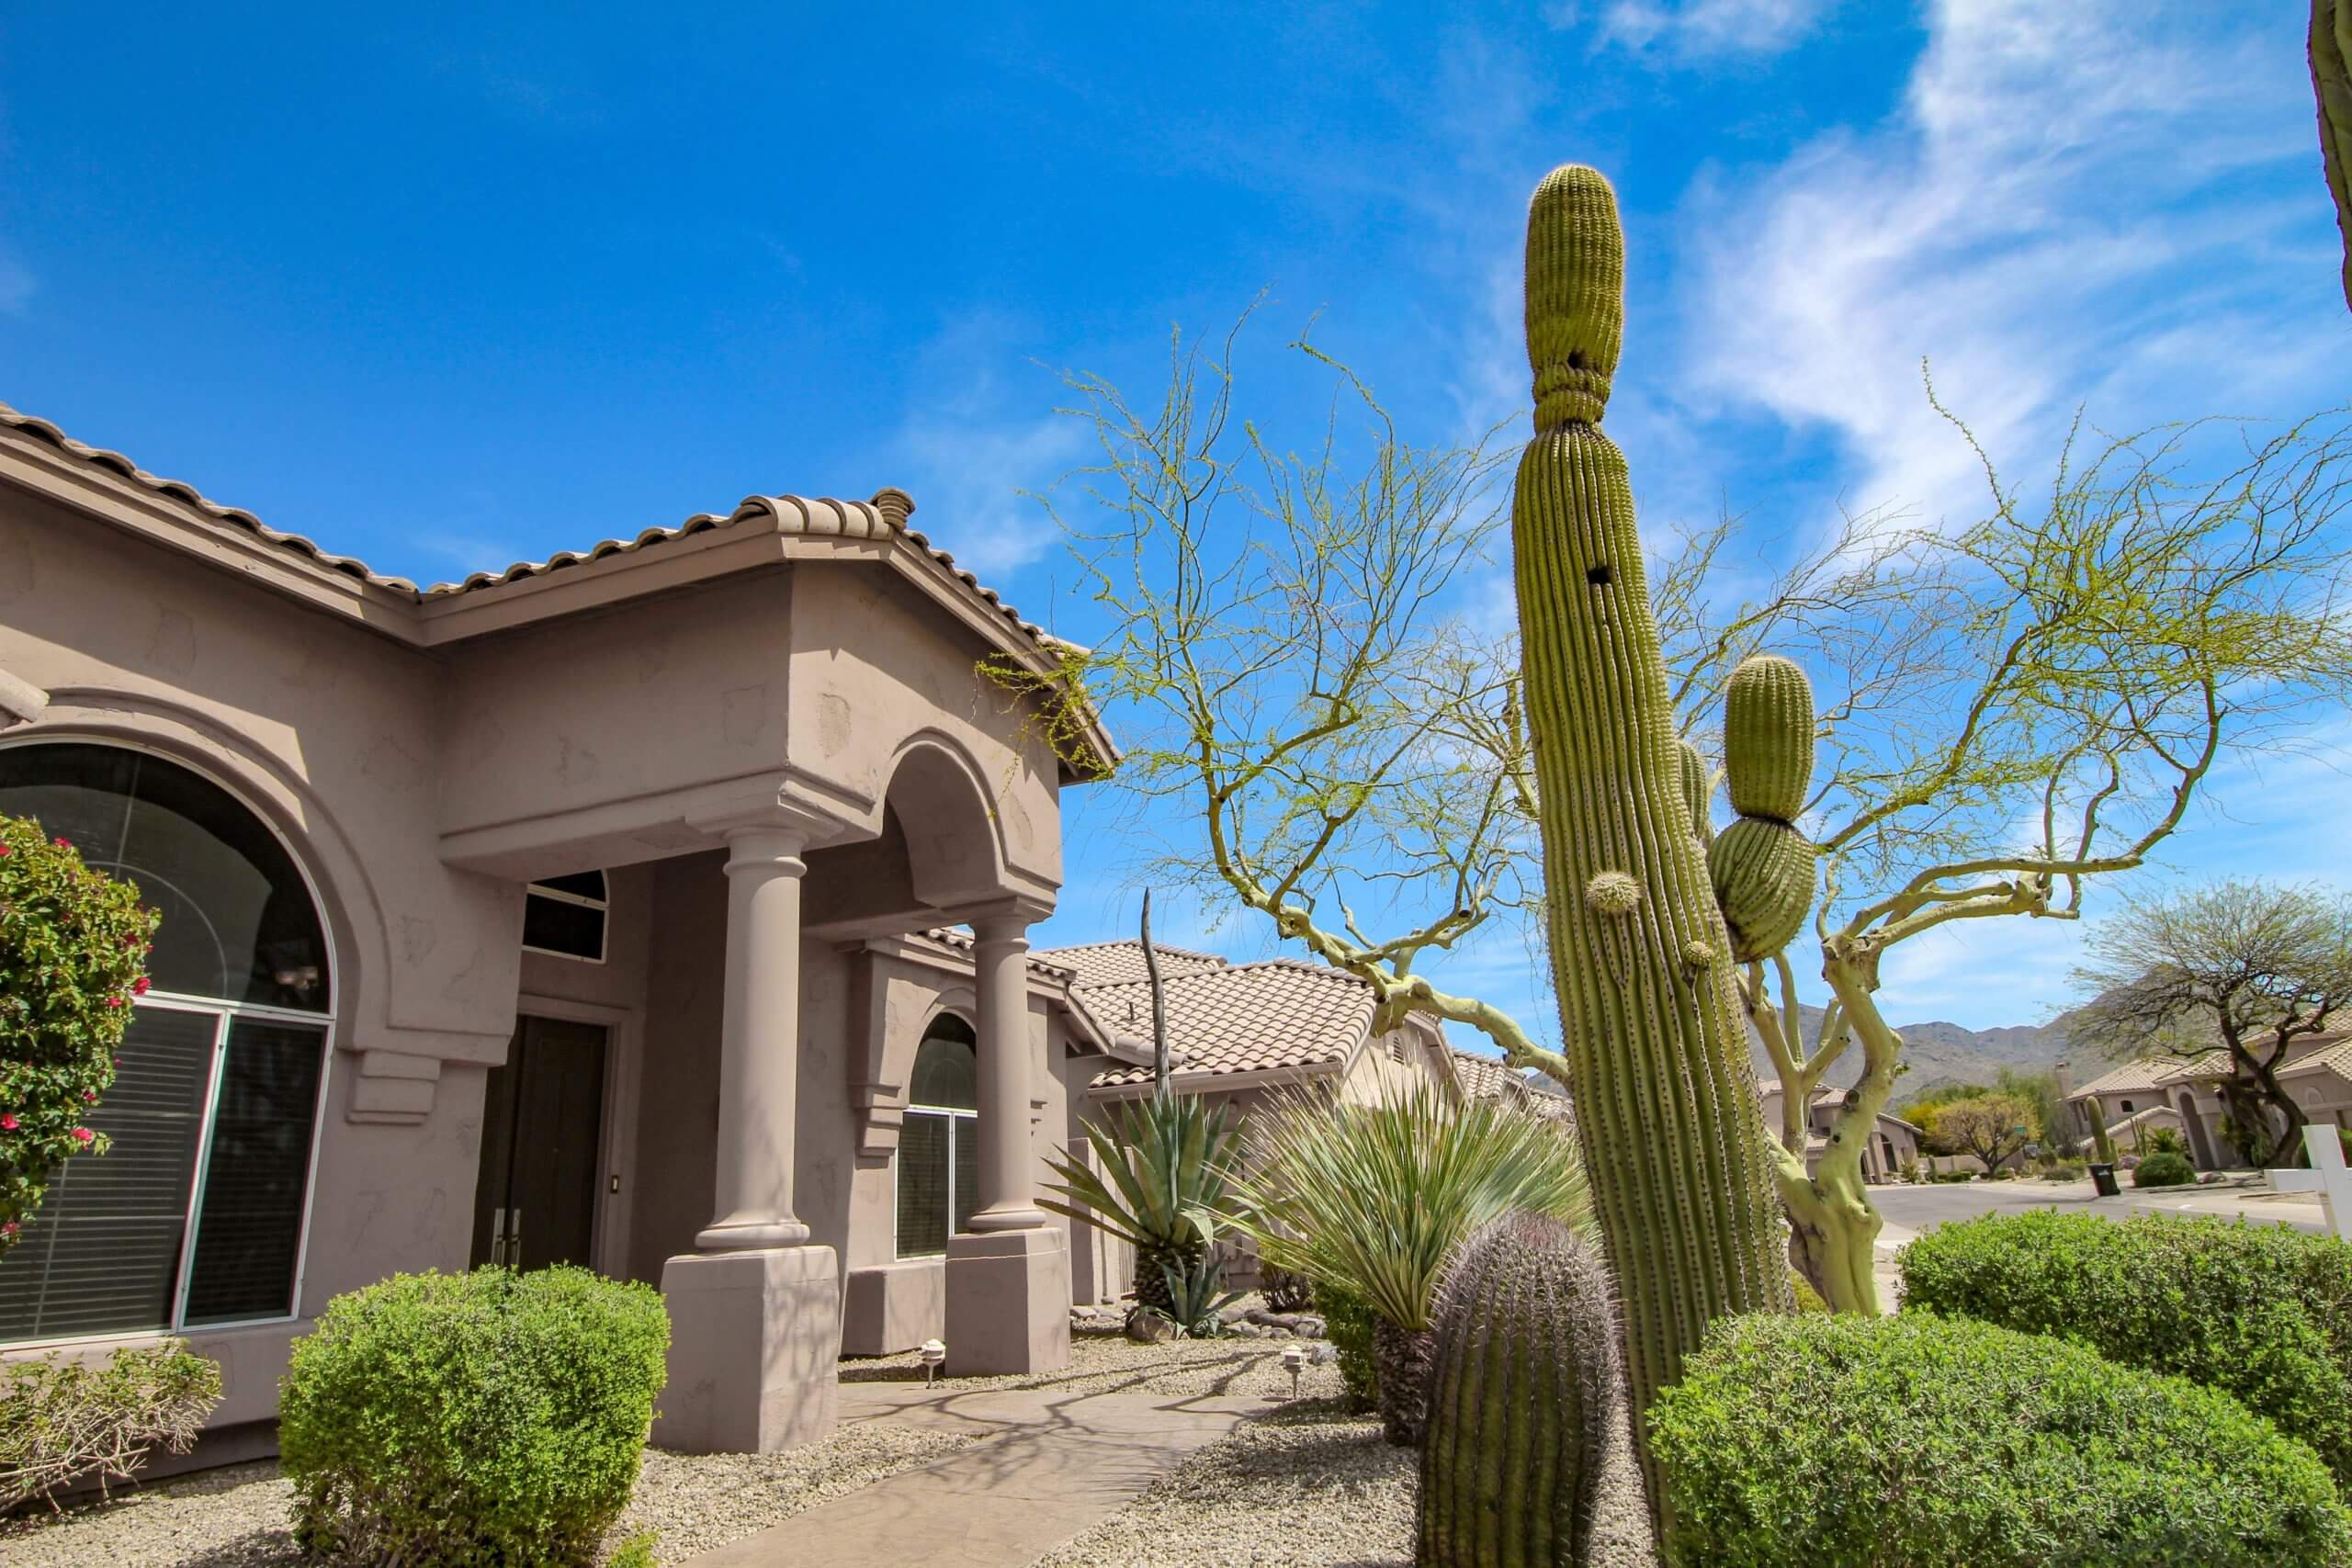 Home and cactus in Tucson, AZ